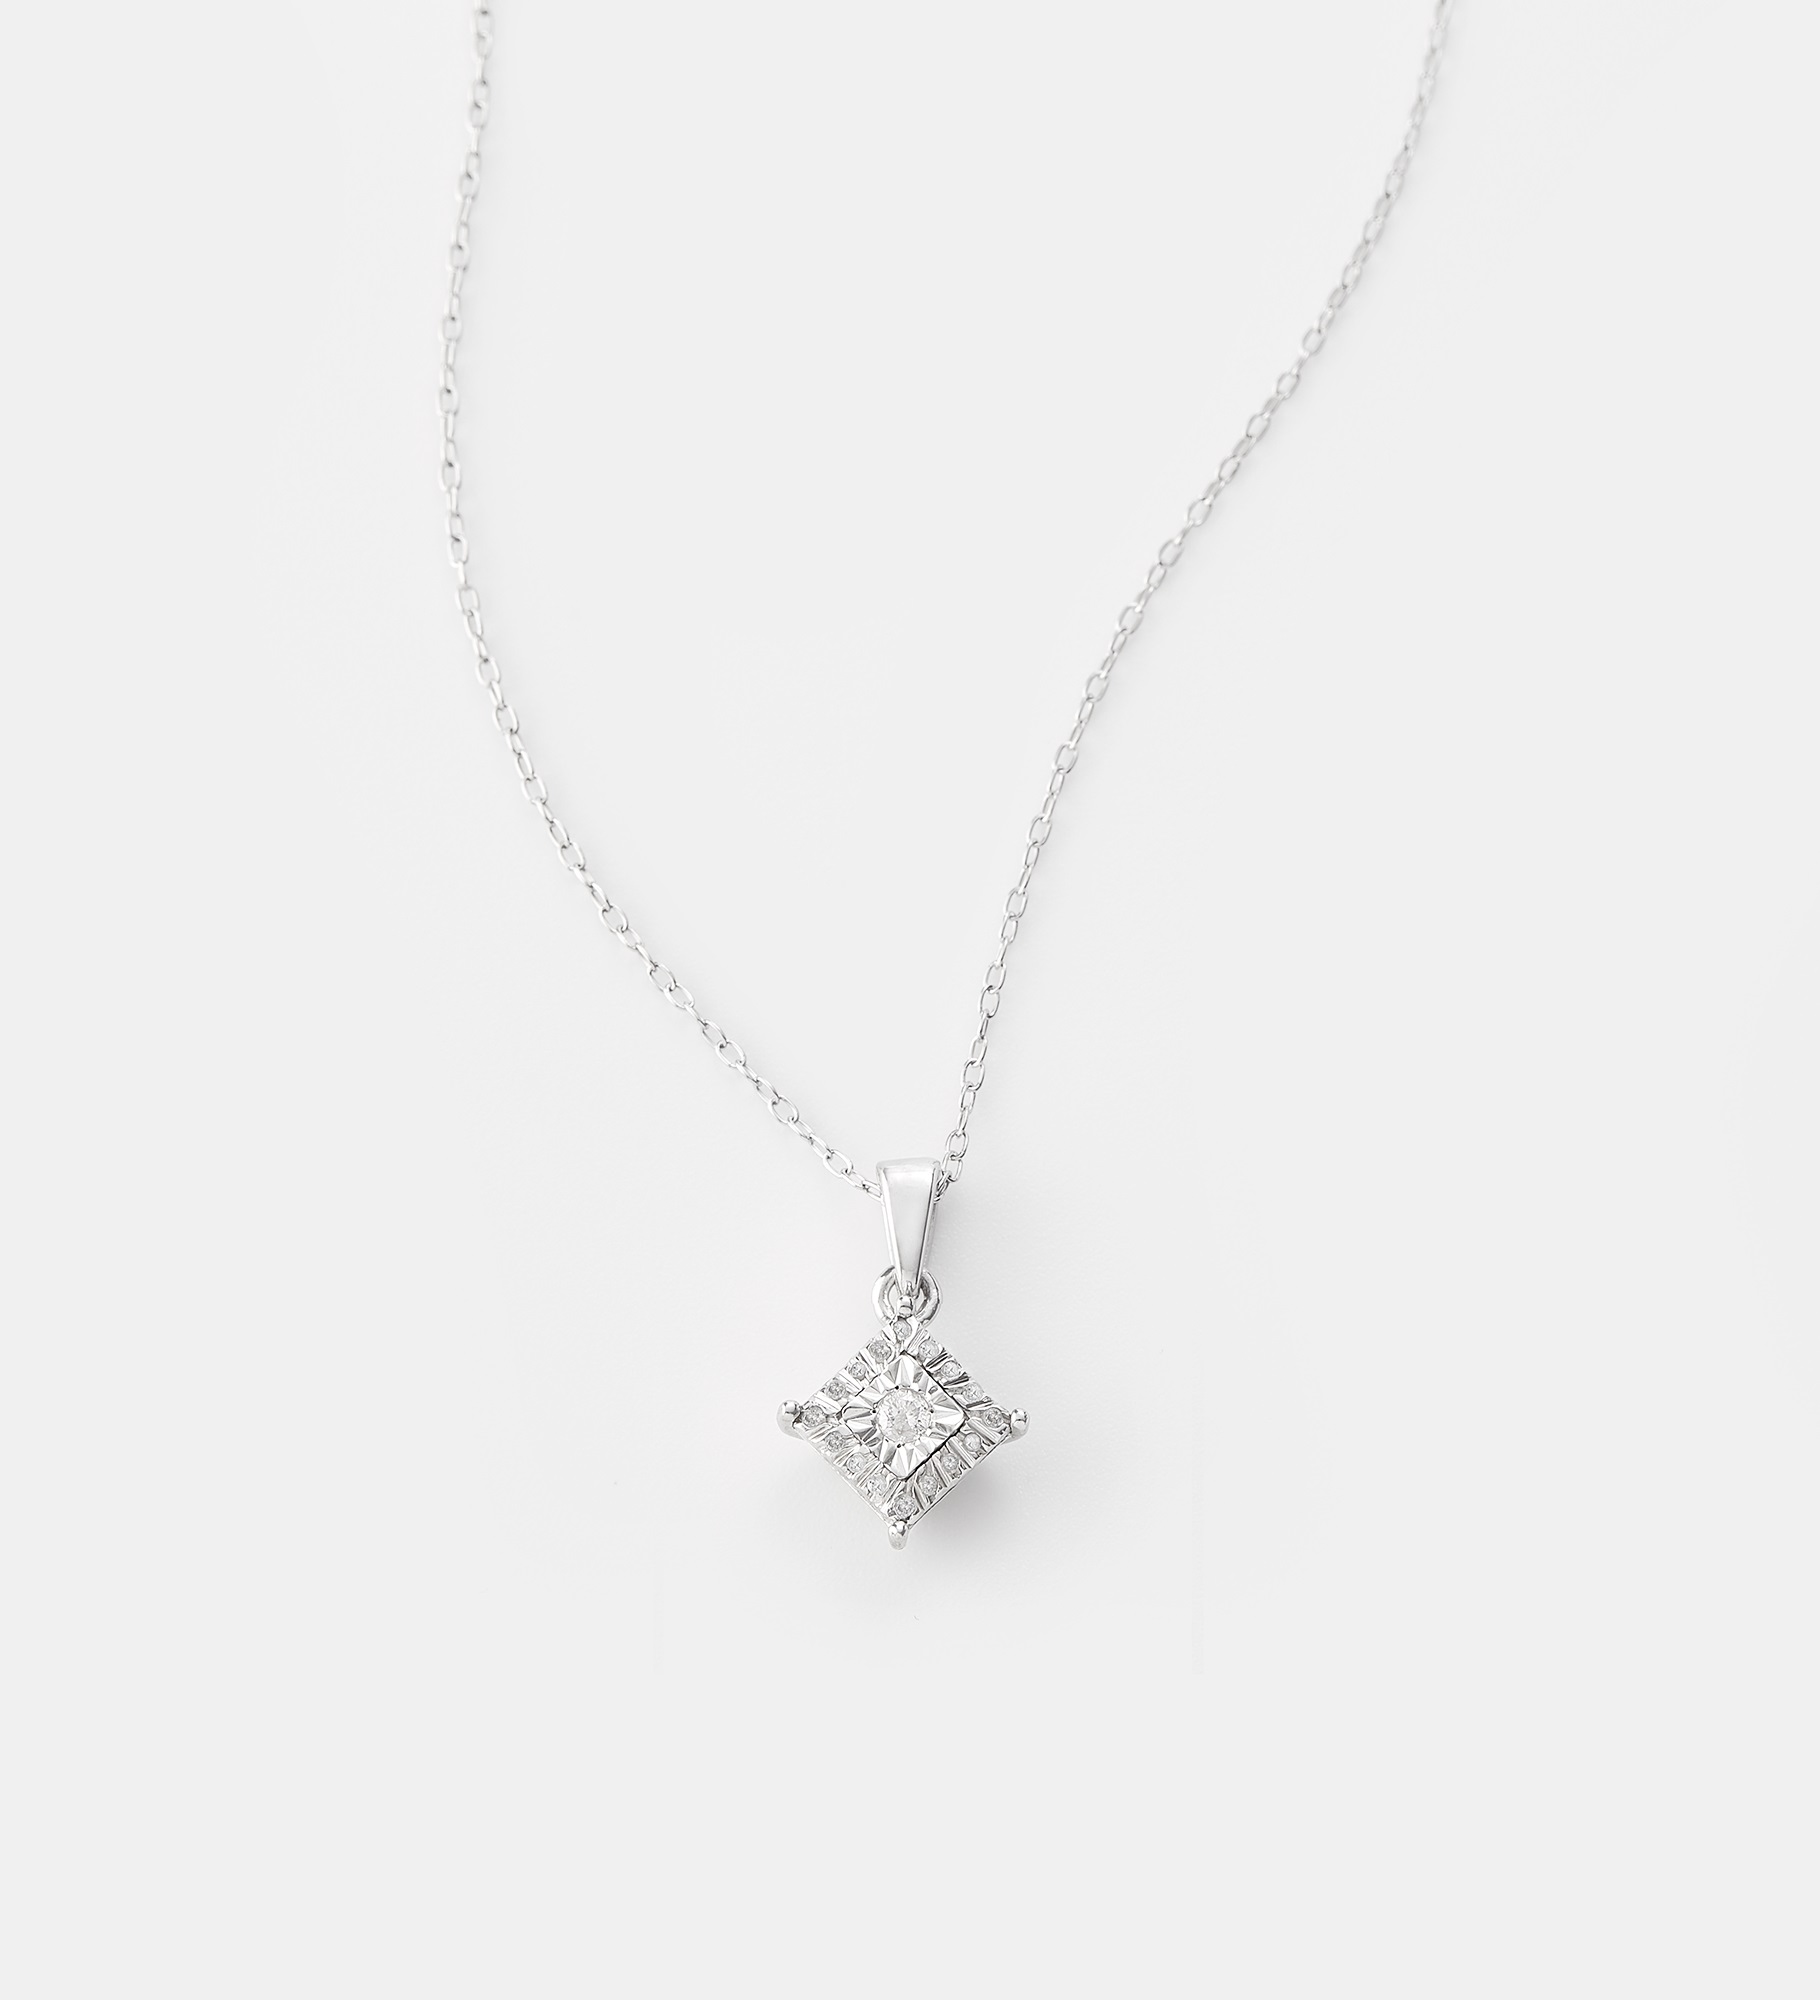  Sterling Silver Diamond Necklace